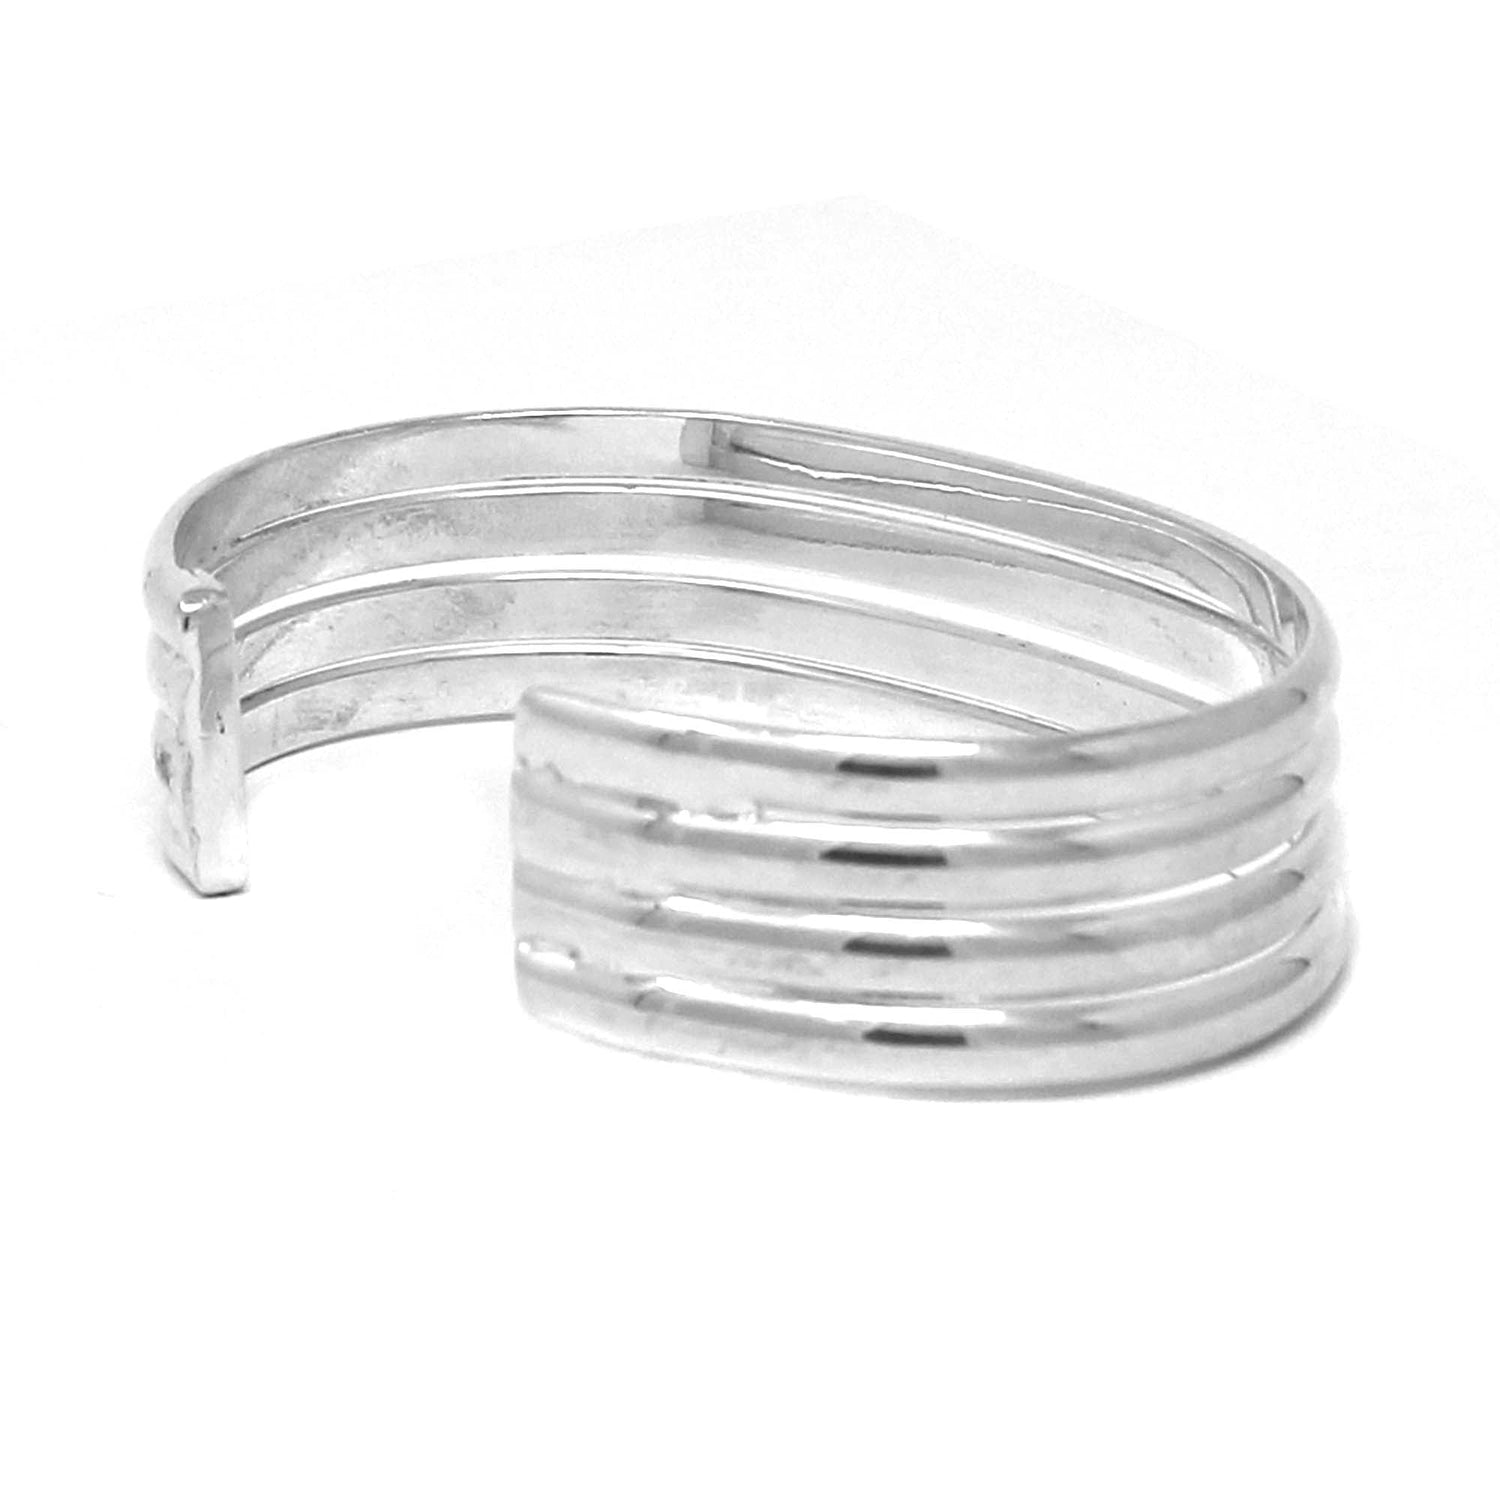 alpaca-silver-overlay-cuff-bracelet-four-bar-design